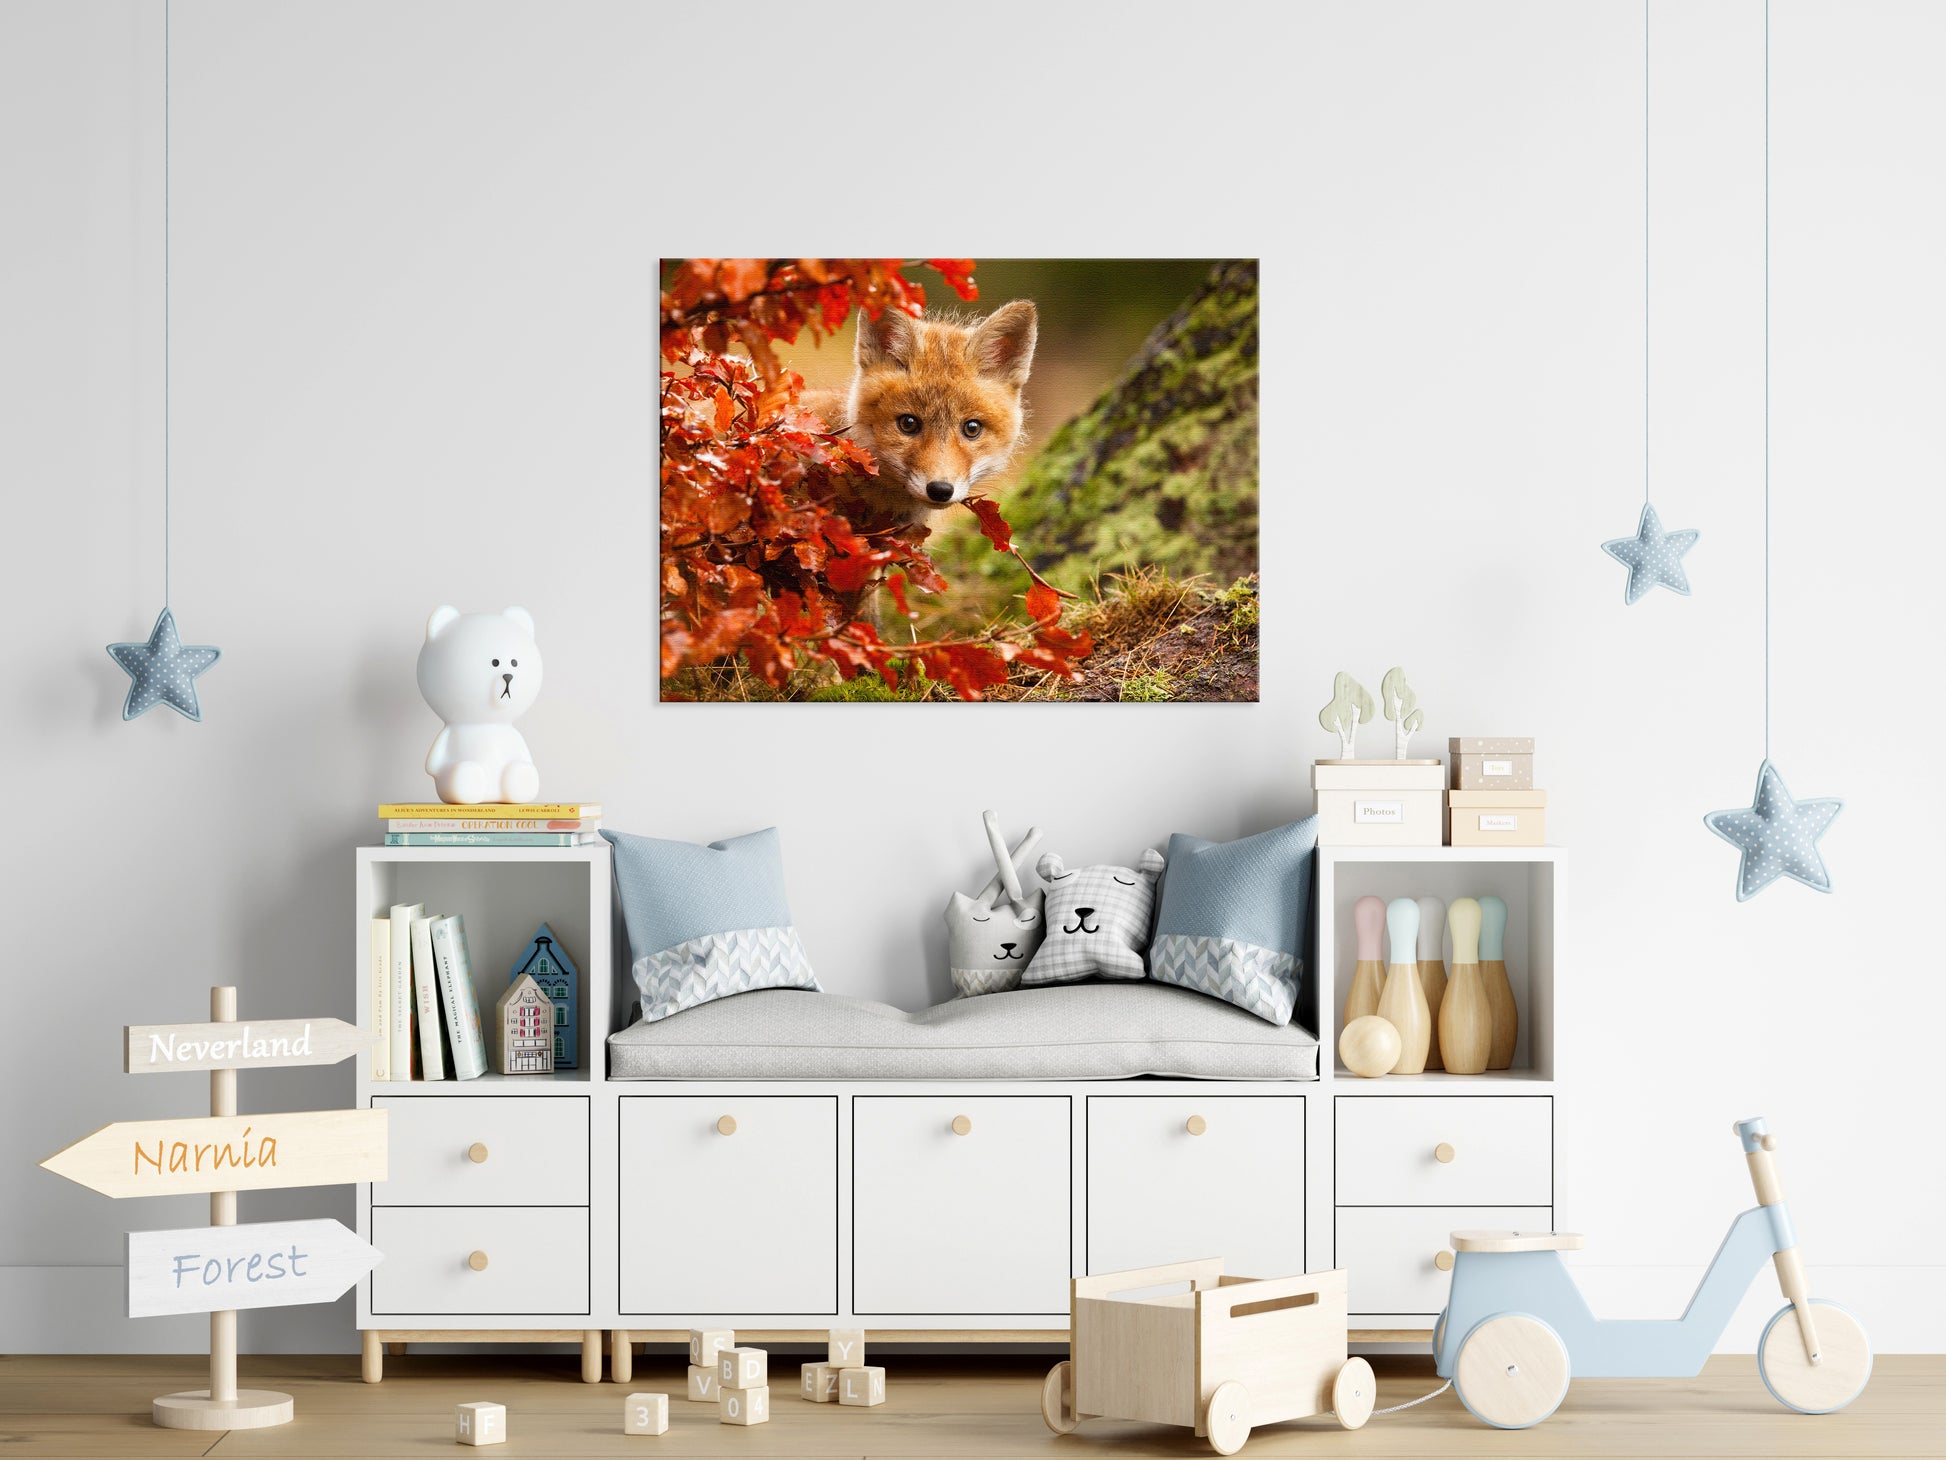 Canvas Nursery Wall Art: Peek-A-Boo Baby Fox Pup And Fall Leaves - Animal / Wildlife / Nature Photograph Canvas Artwork - Wall Decor